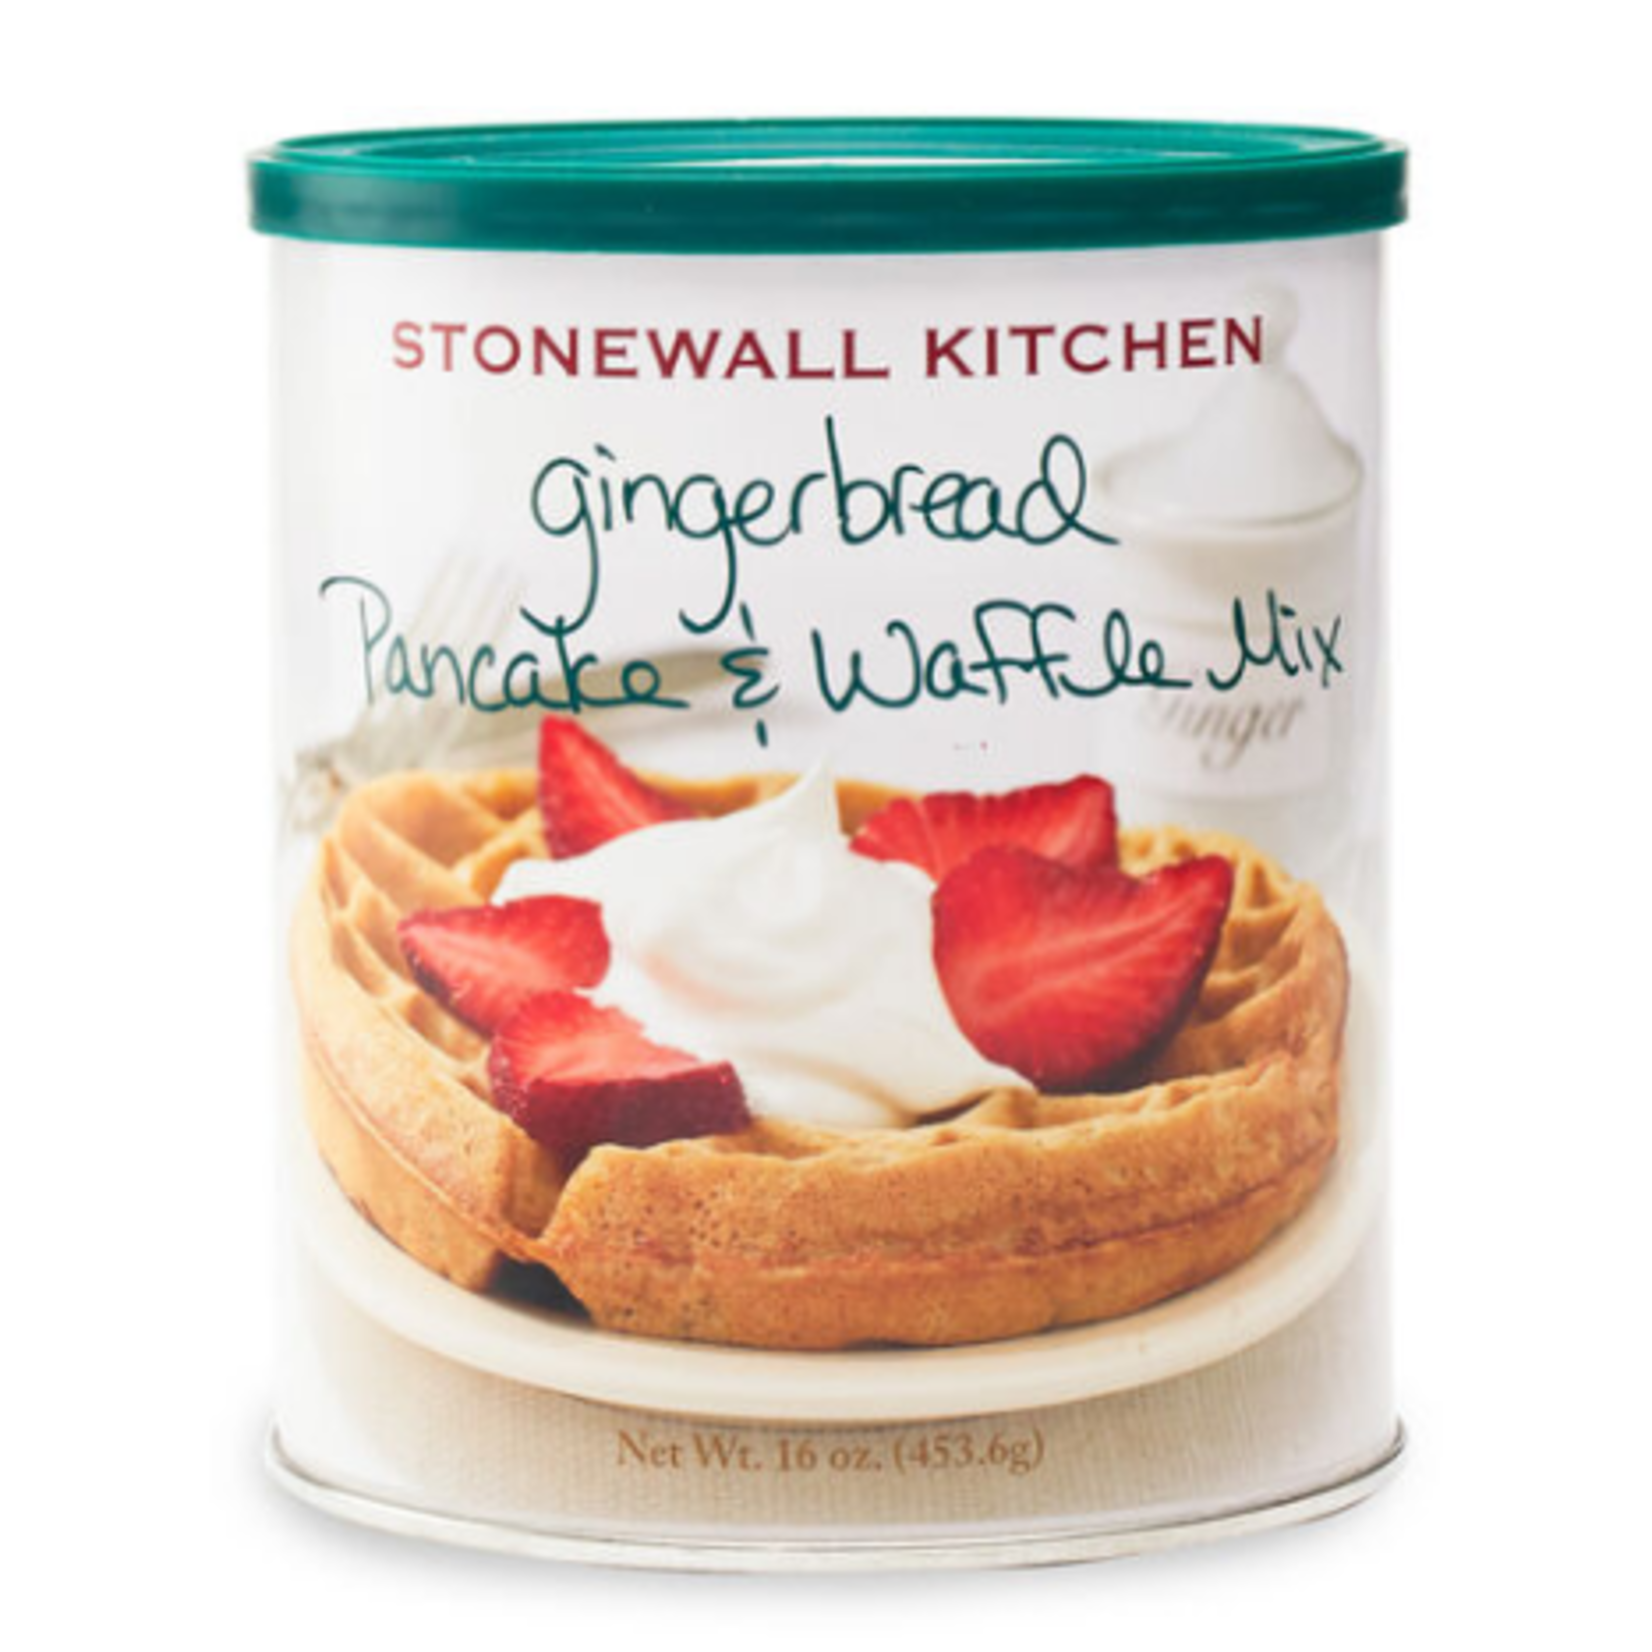 Stonewall Kitchen Holiday Gingerbread Pancake & Waffle Mix, 16 oz Can